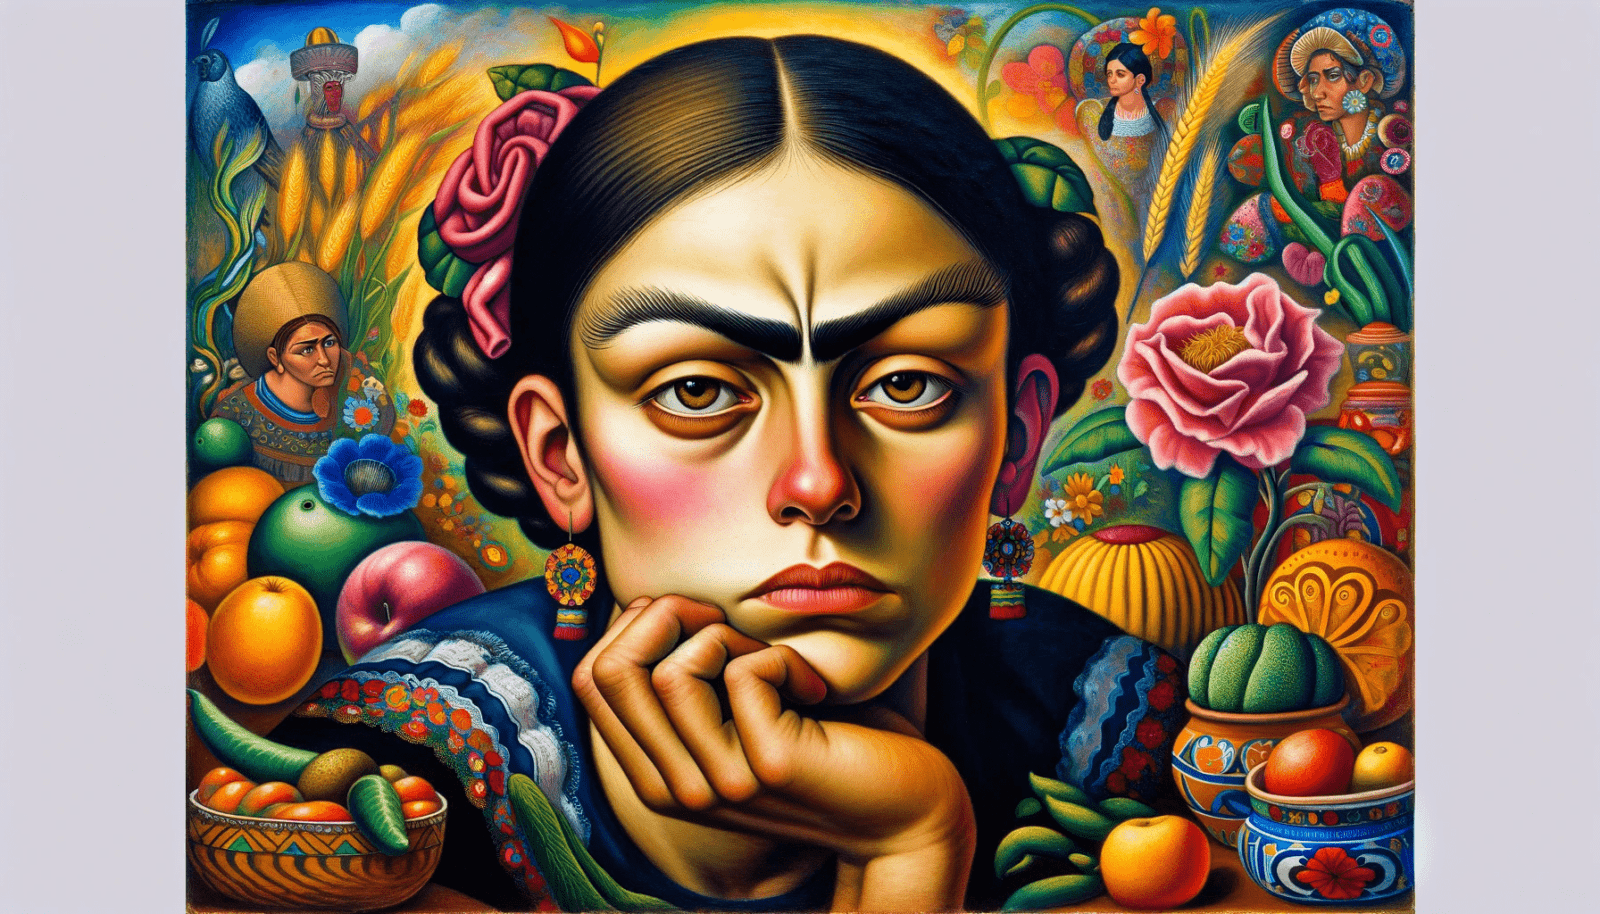 Frida e Diego, tra arte e passione